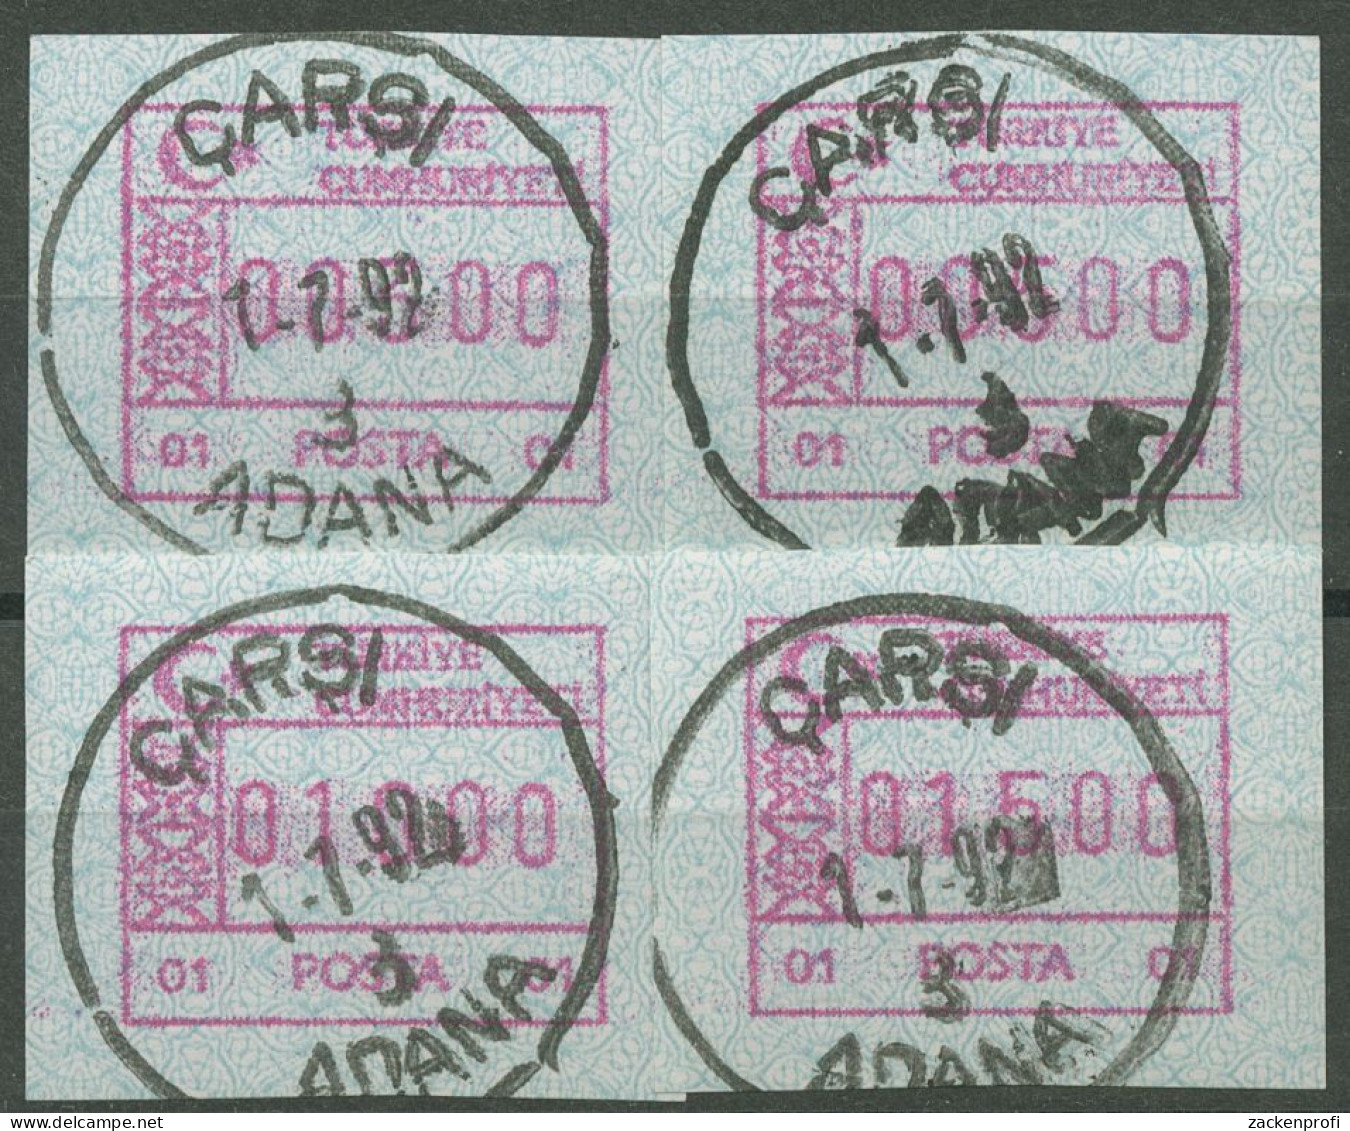 Türkei ATM 1992 Ornamente Automat 01 01, Satz 4 Werte ATM 2.1 S1 Gestempelt - Distribuidores